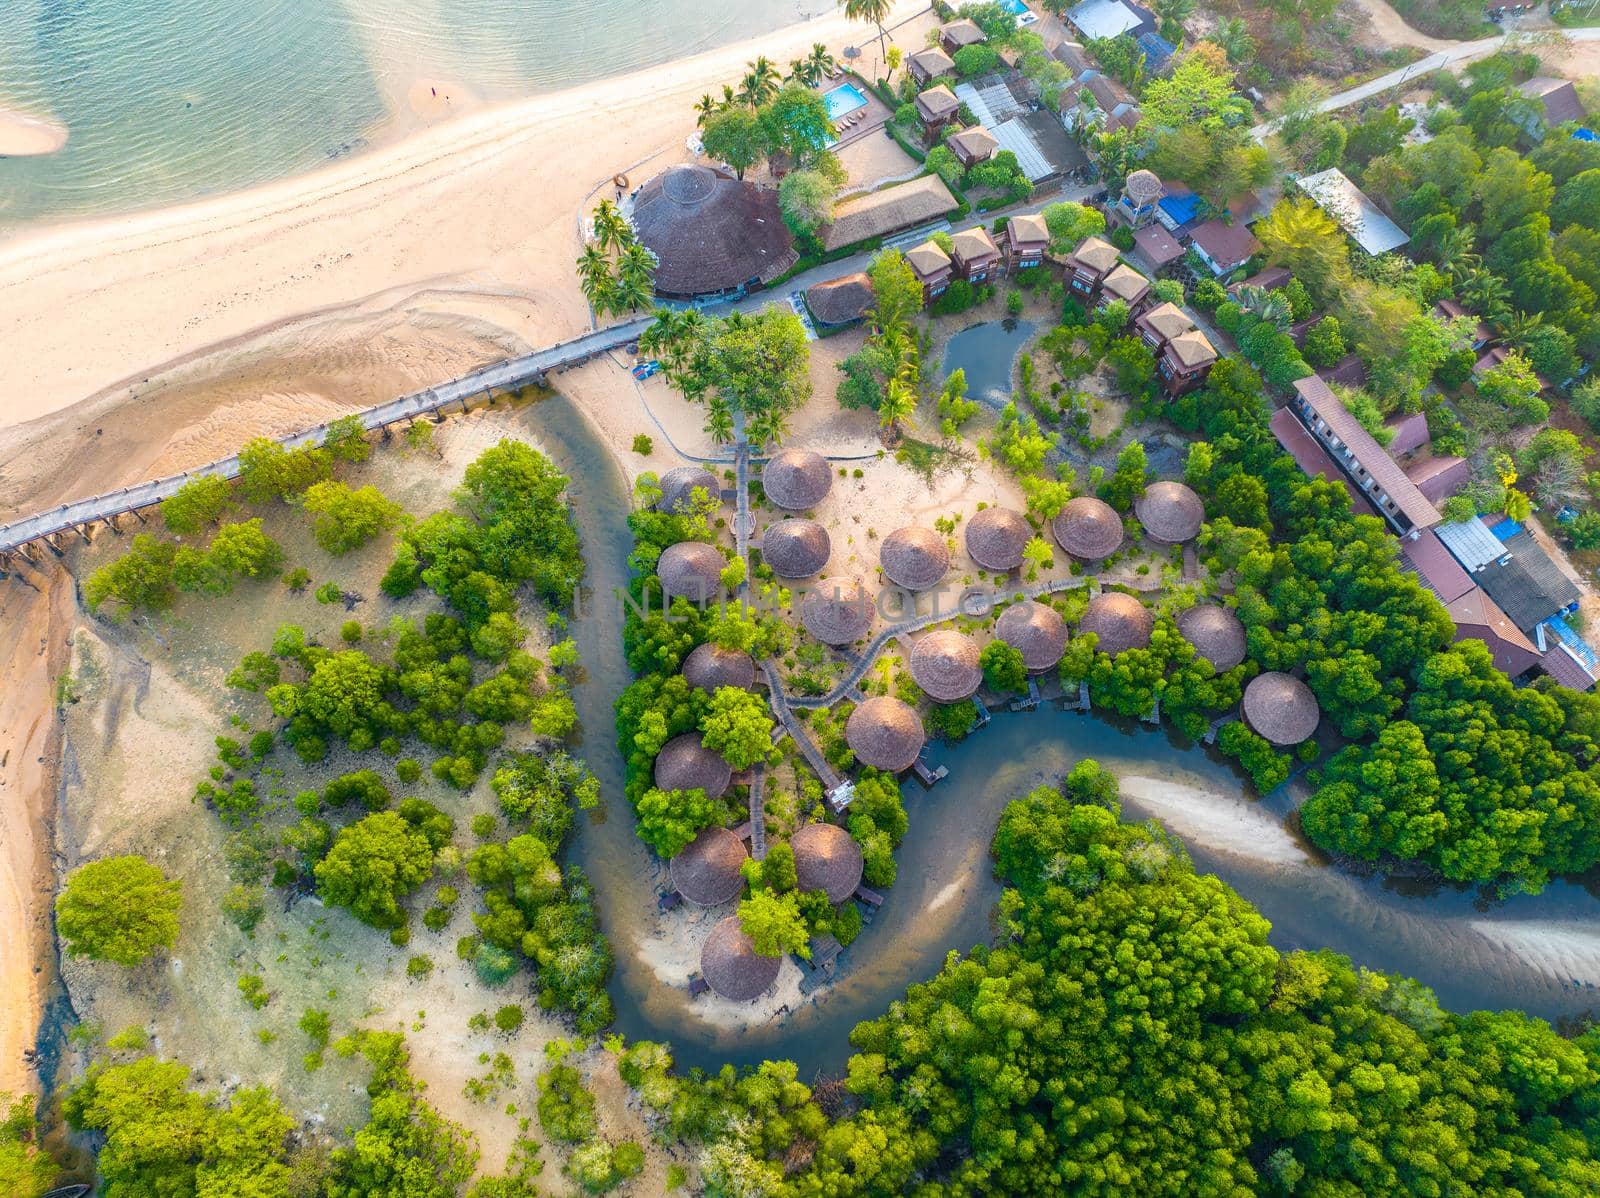 Koh Phayam beach in Ranong, Thailand. High quality photo